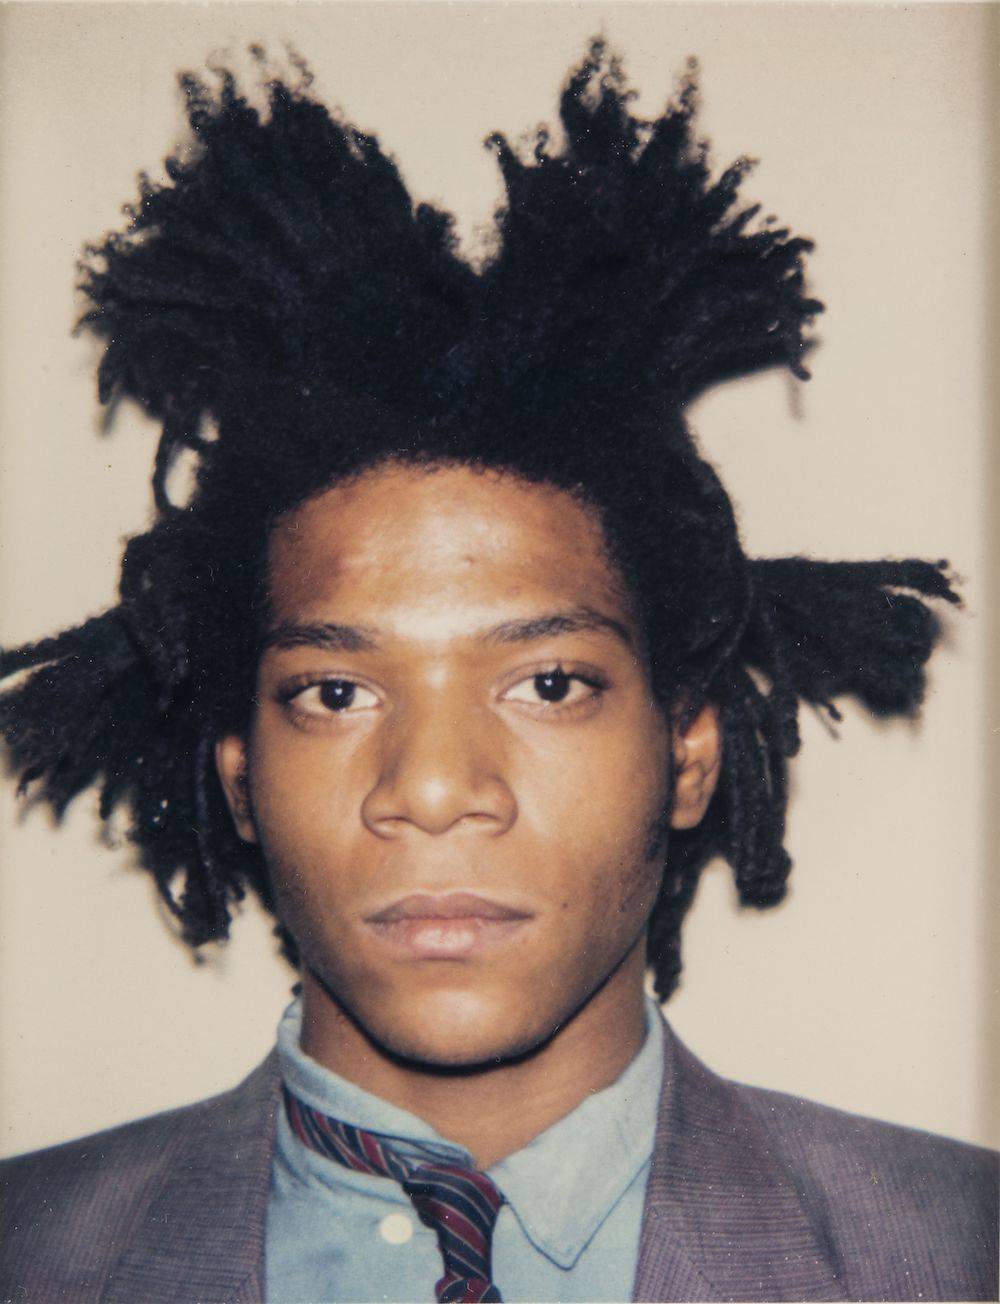 Andy Warhol, Polaroid Portrait of Jean-Michel Basquiat